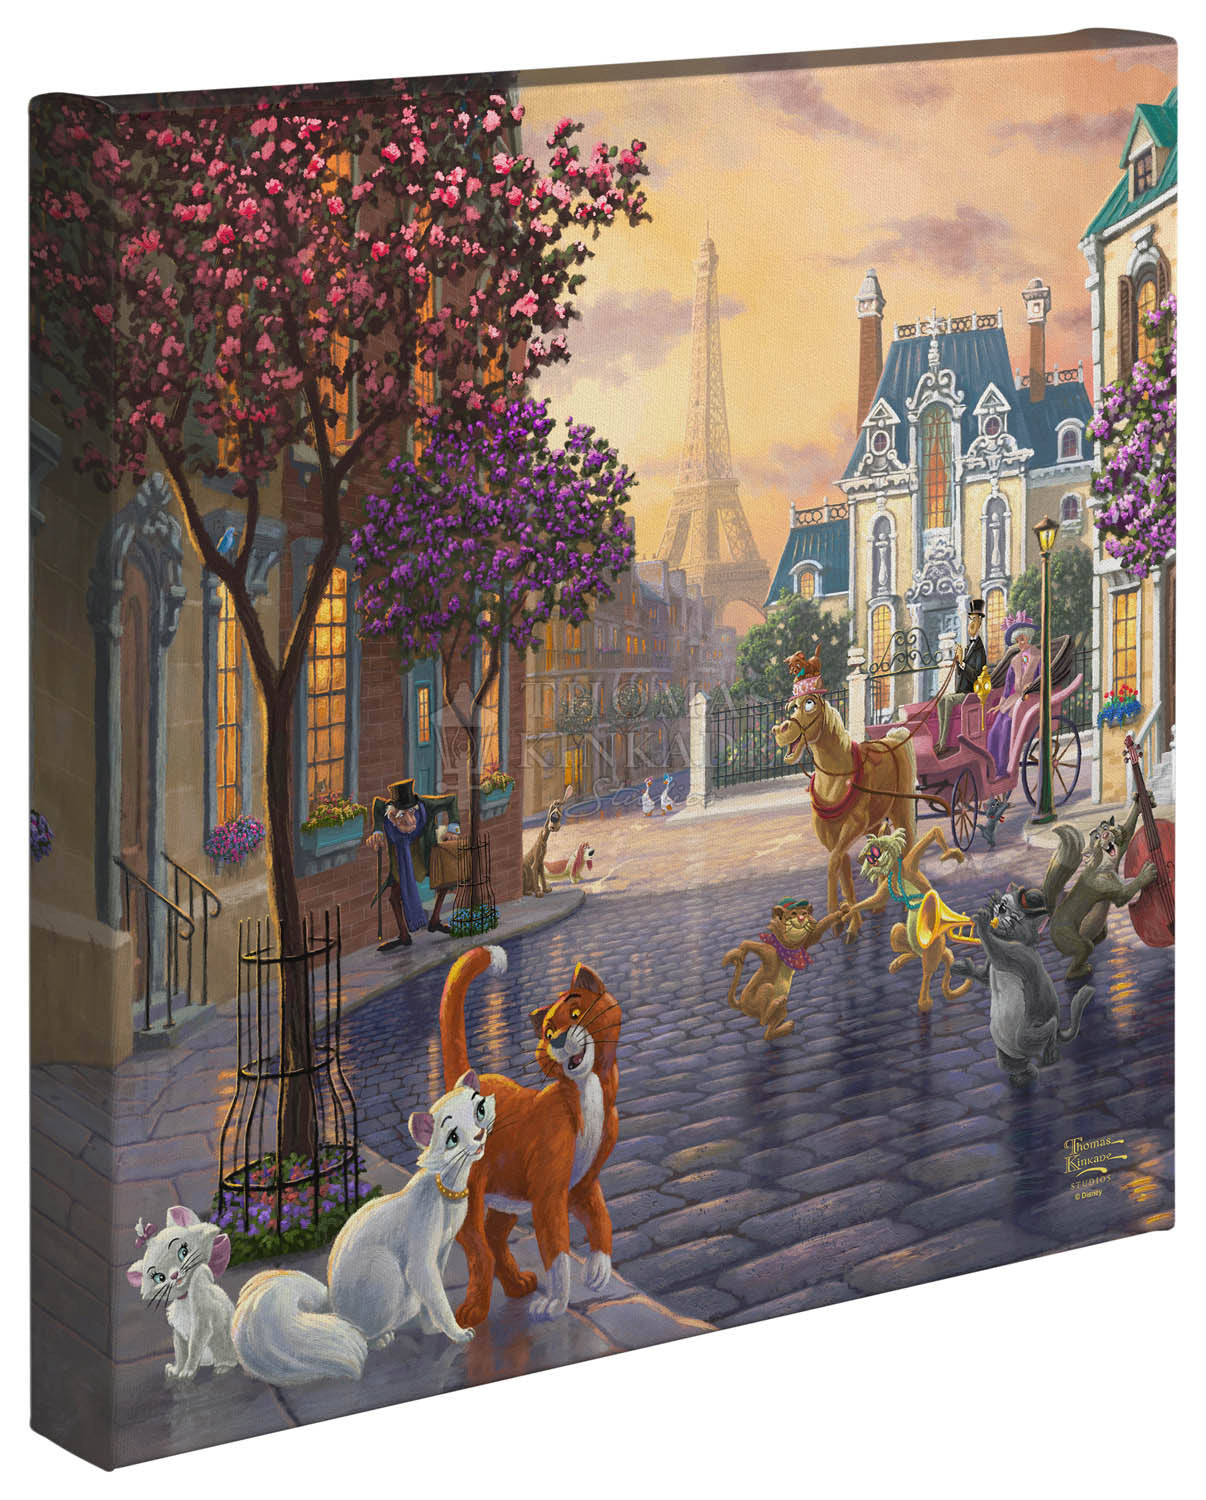 Thomas Kinkade Studios Disney "The Aristocats" Limited Edition Canvas Giclee